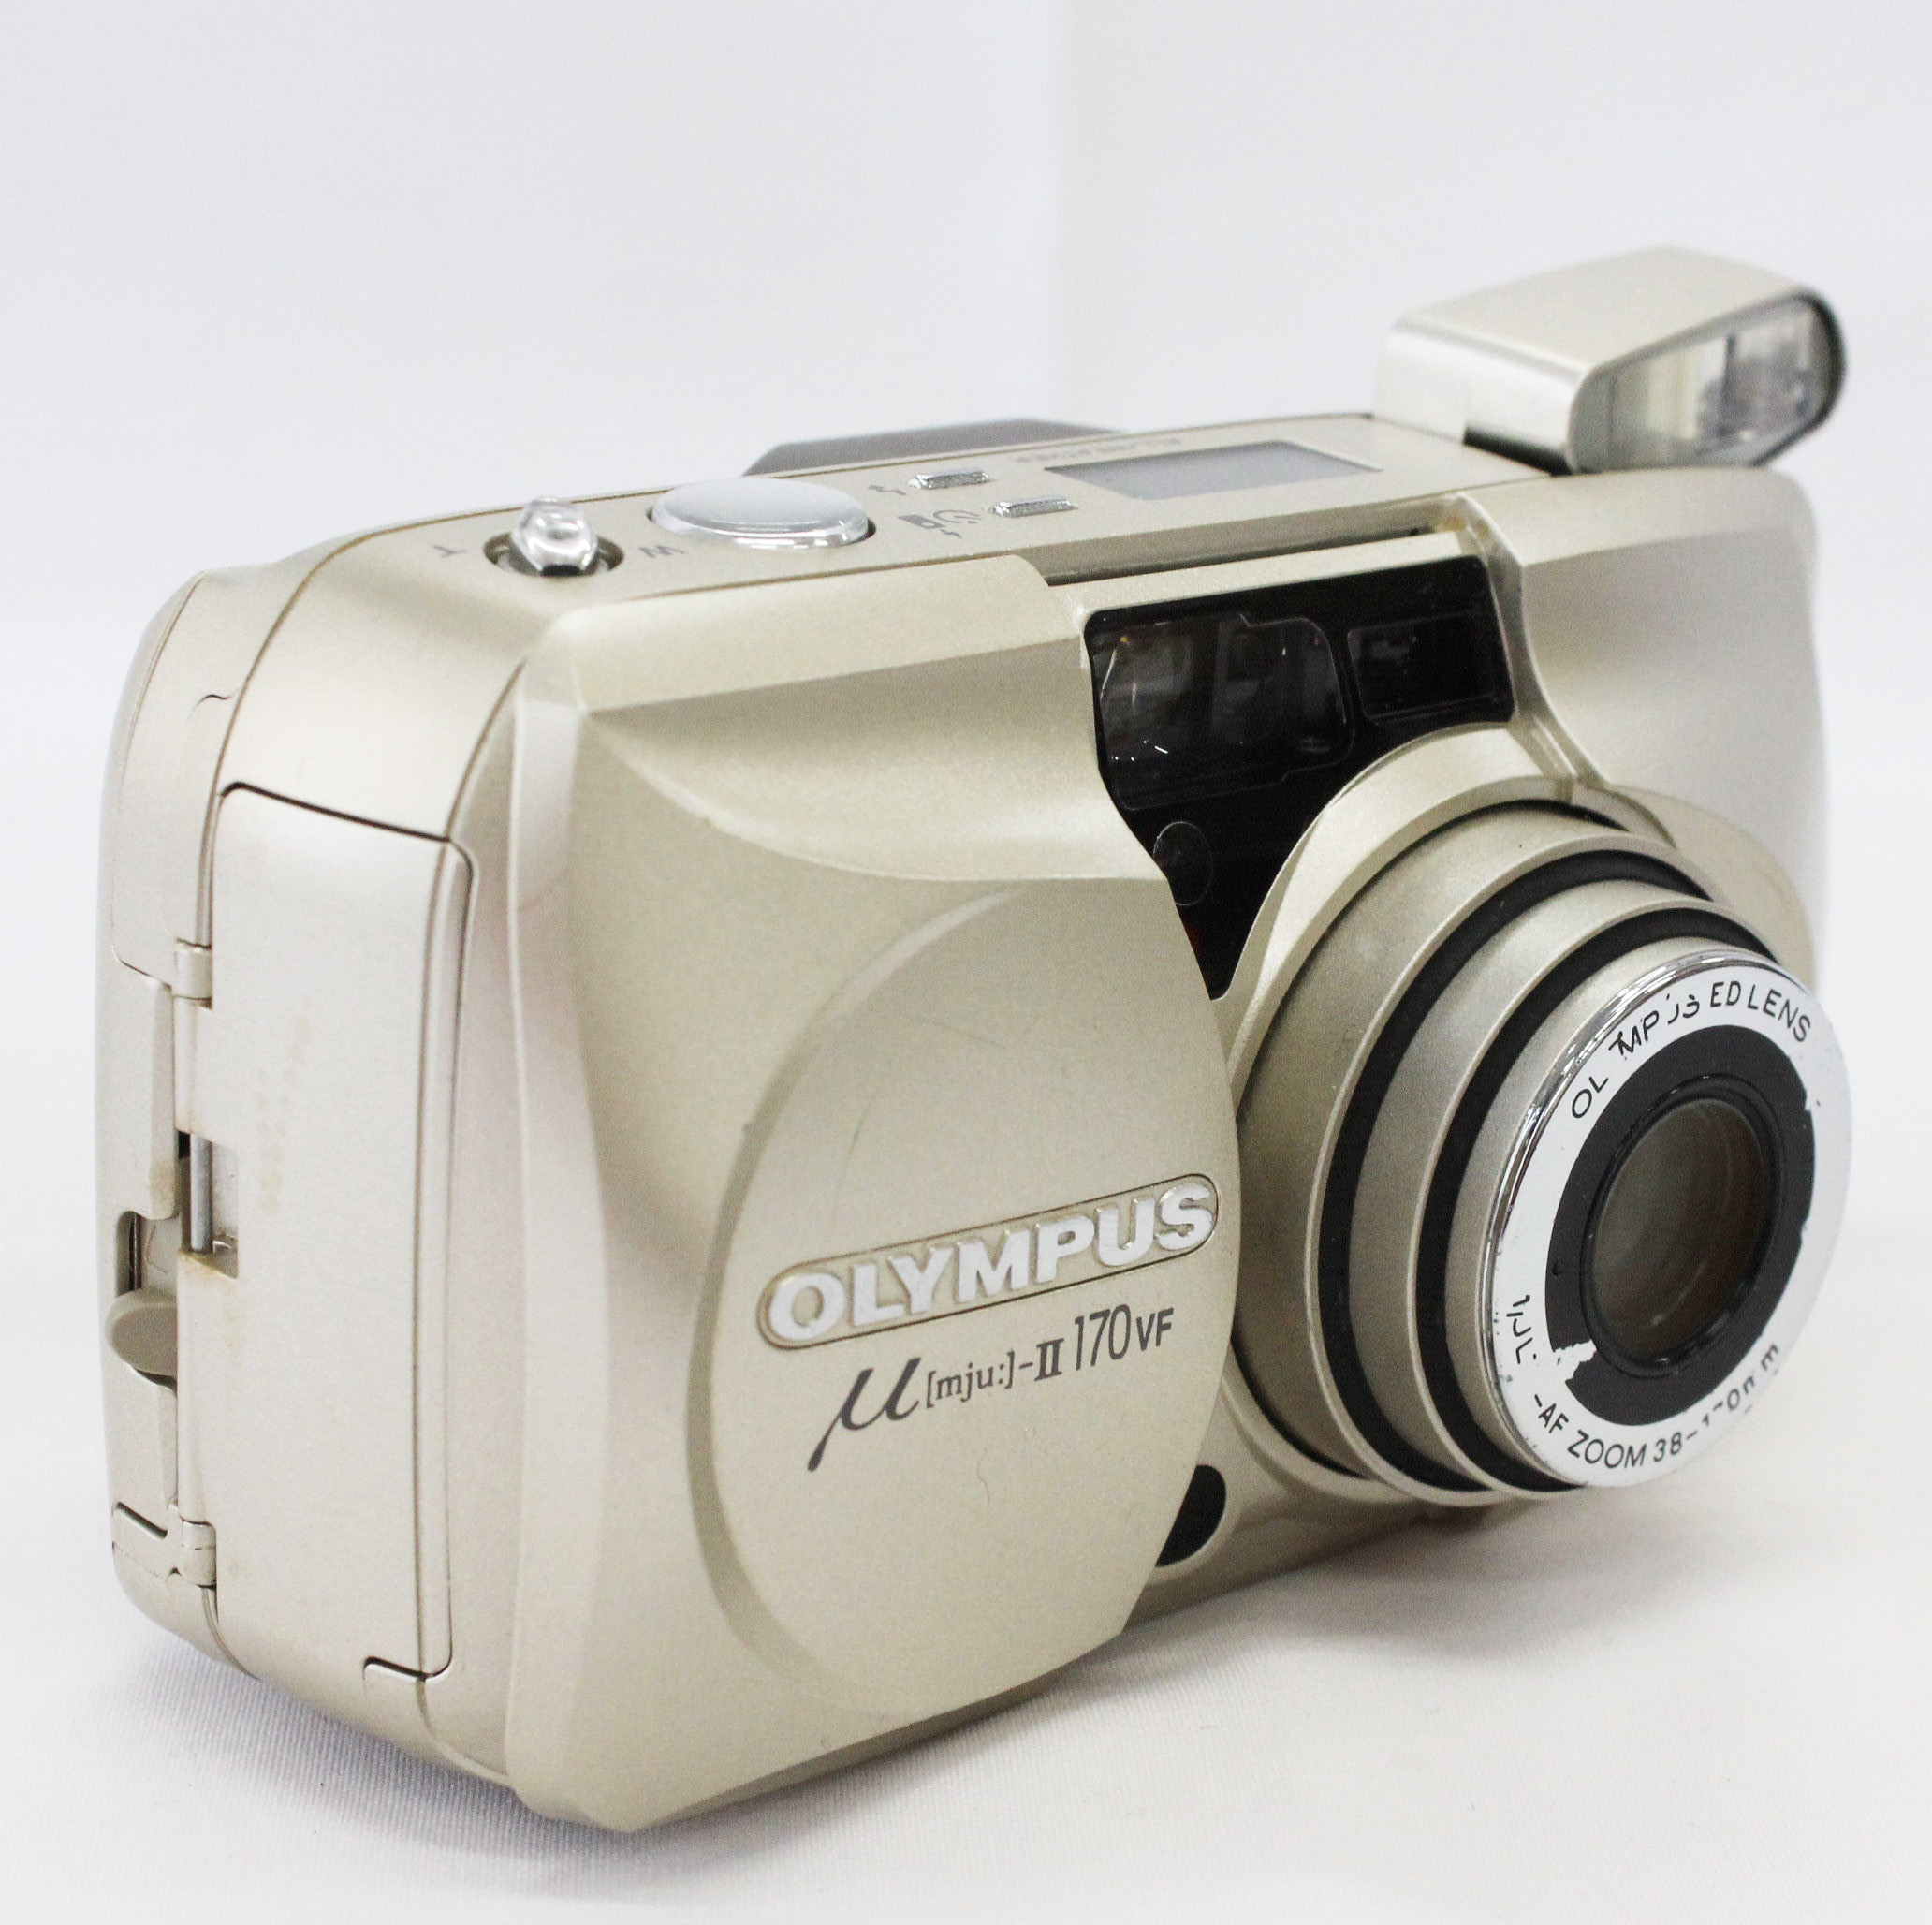 Olympus μ MJU II 170 VF Multi-AF Zoom 35mm Point & Shoot Film Camera with  Remote Control RC-300C from Japan (C1235) | Big Fish J-Camera (Big Fish 